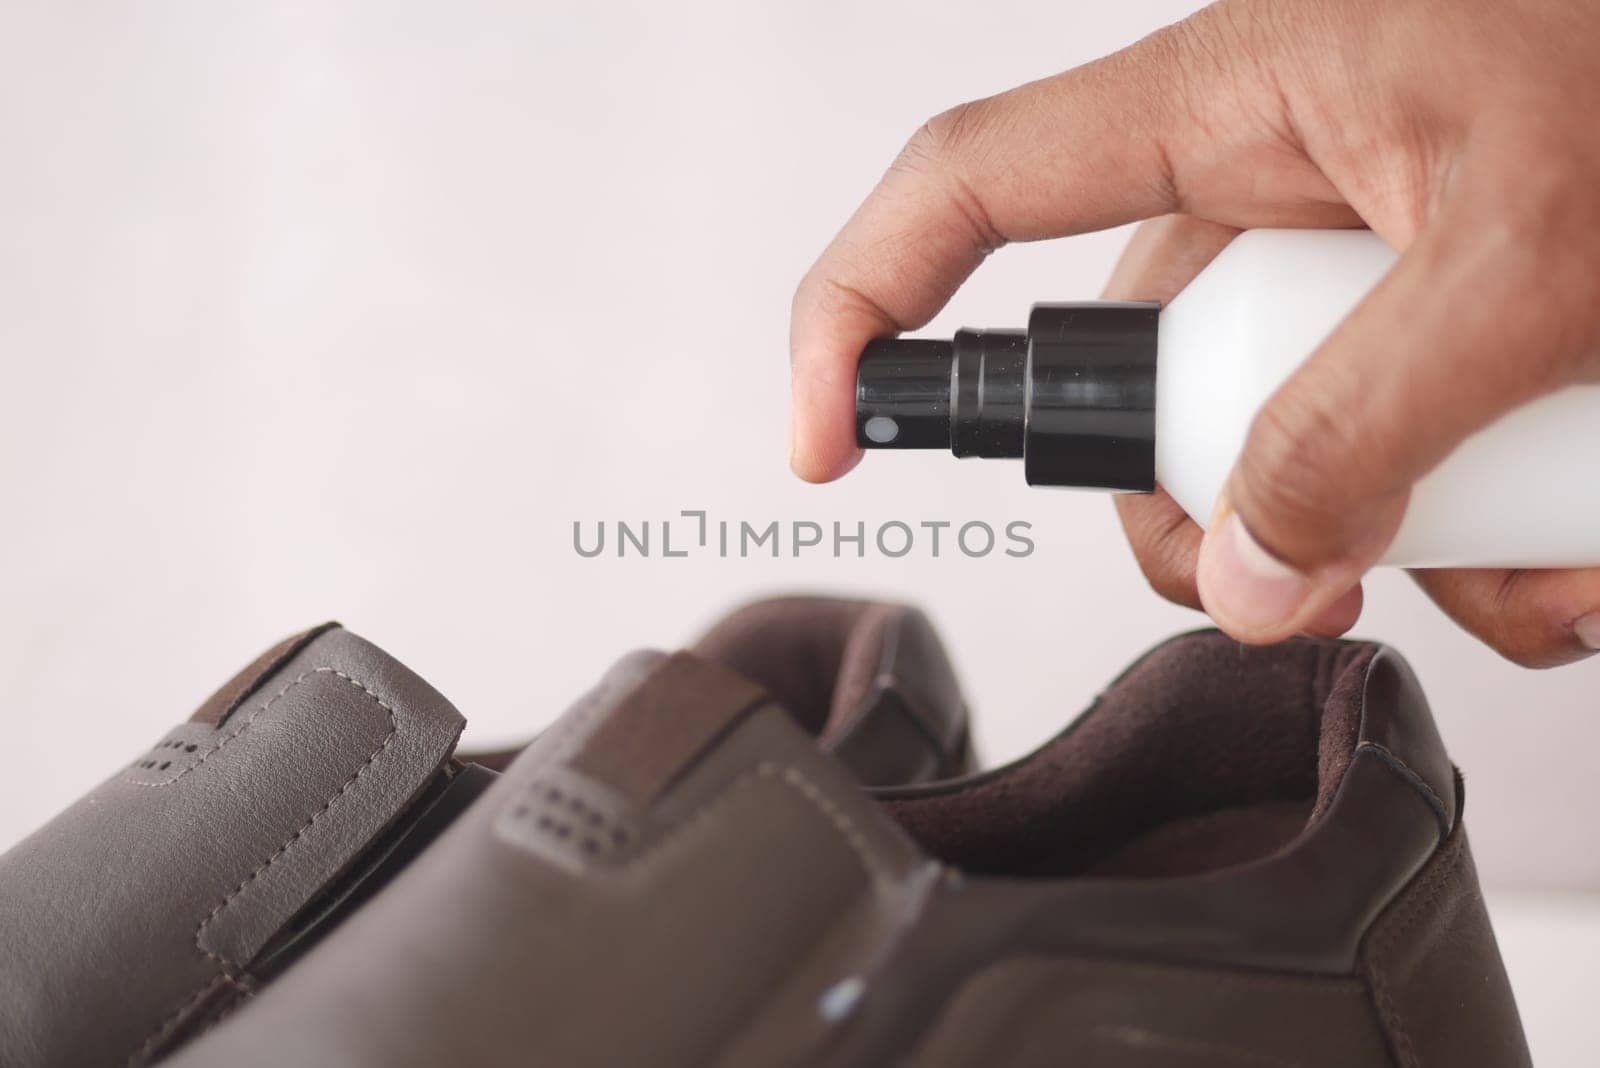 spraying deodorant on sweaty shoes. by towfiq007